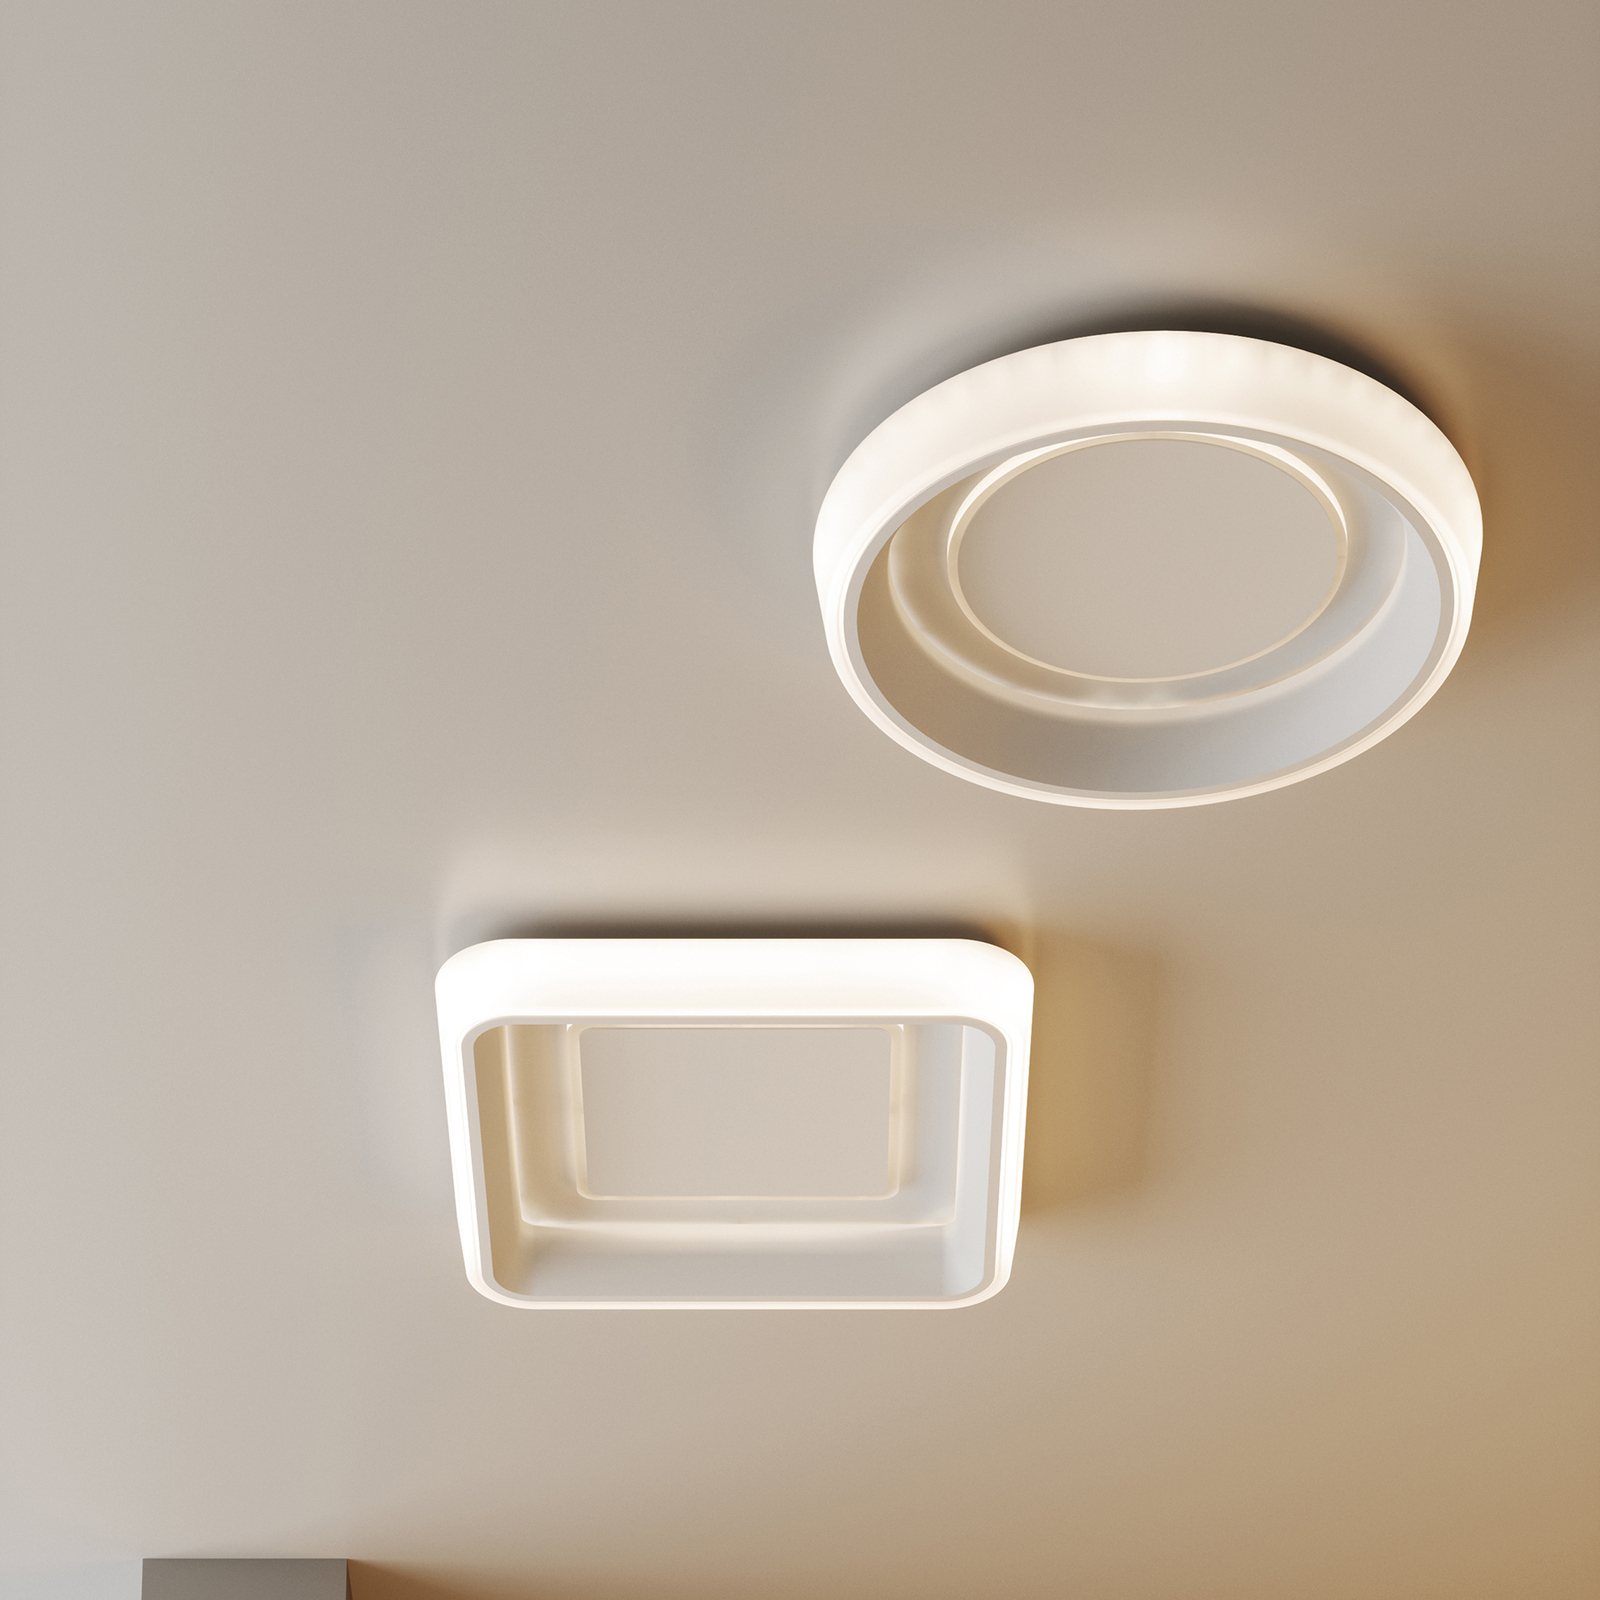 LED-kattovalaisin Nurax valittavissa oleva valon väri, kulmikas